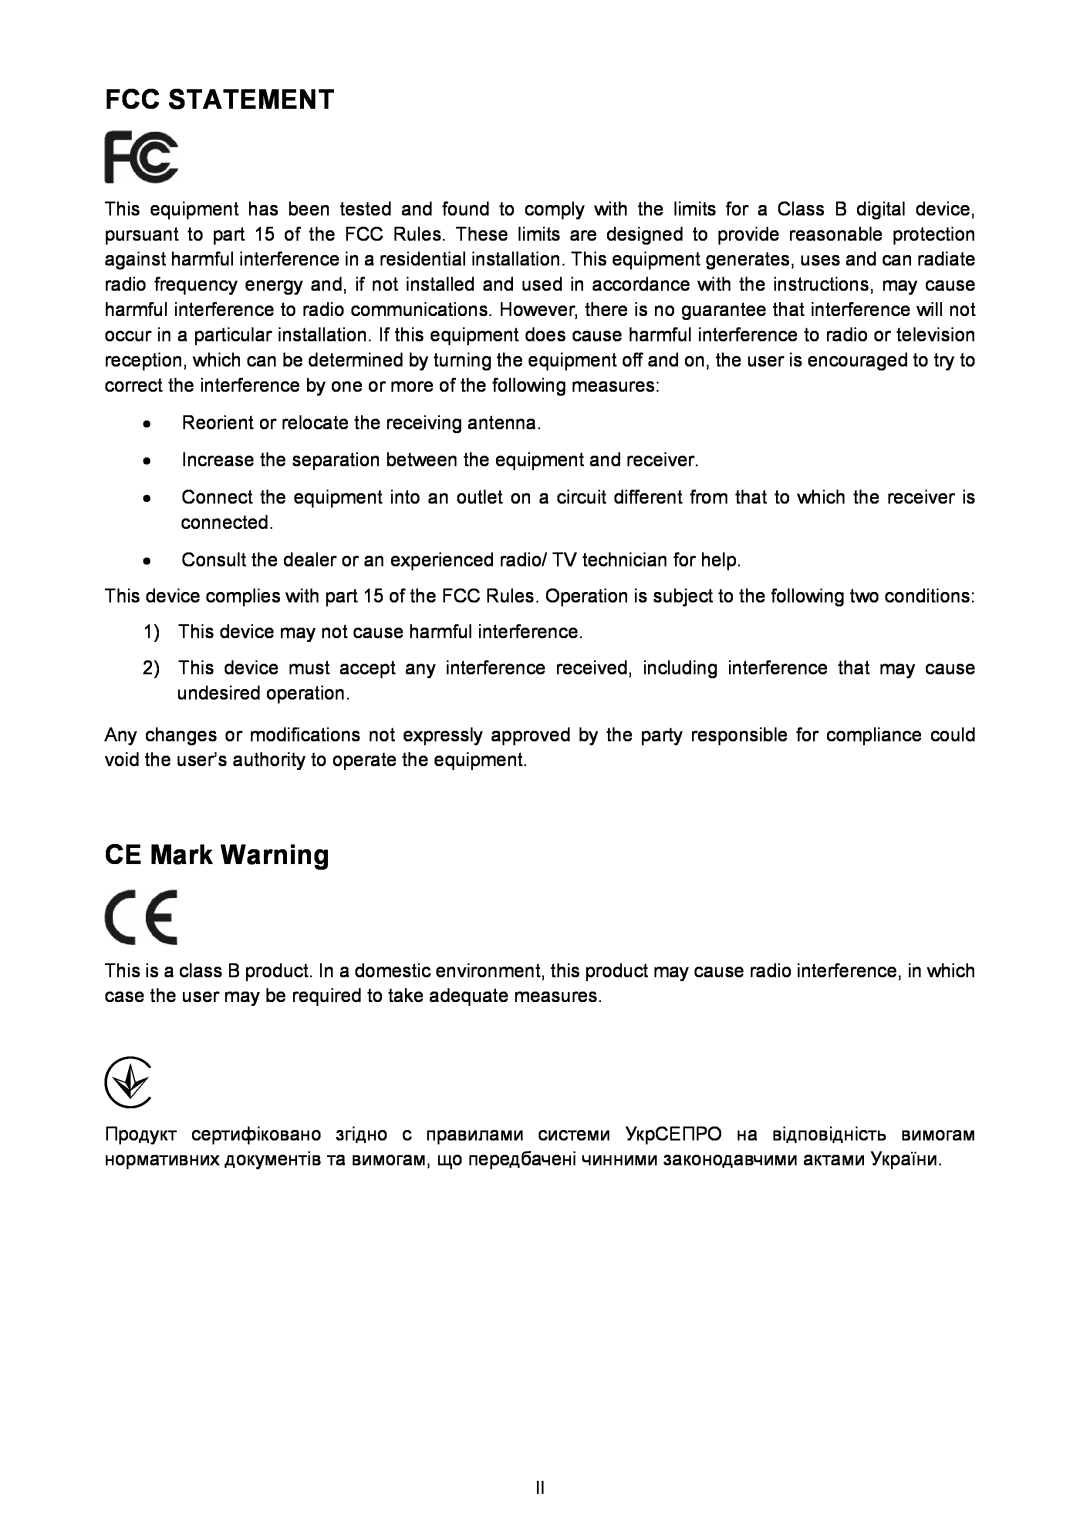 TP-Link TL-PA411 manual Fcc Statement, CE Mark Warning 